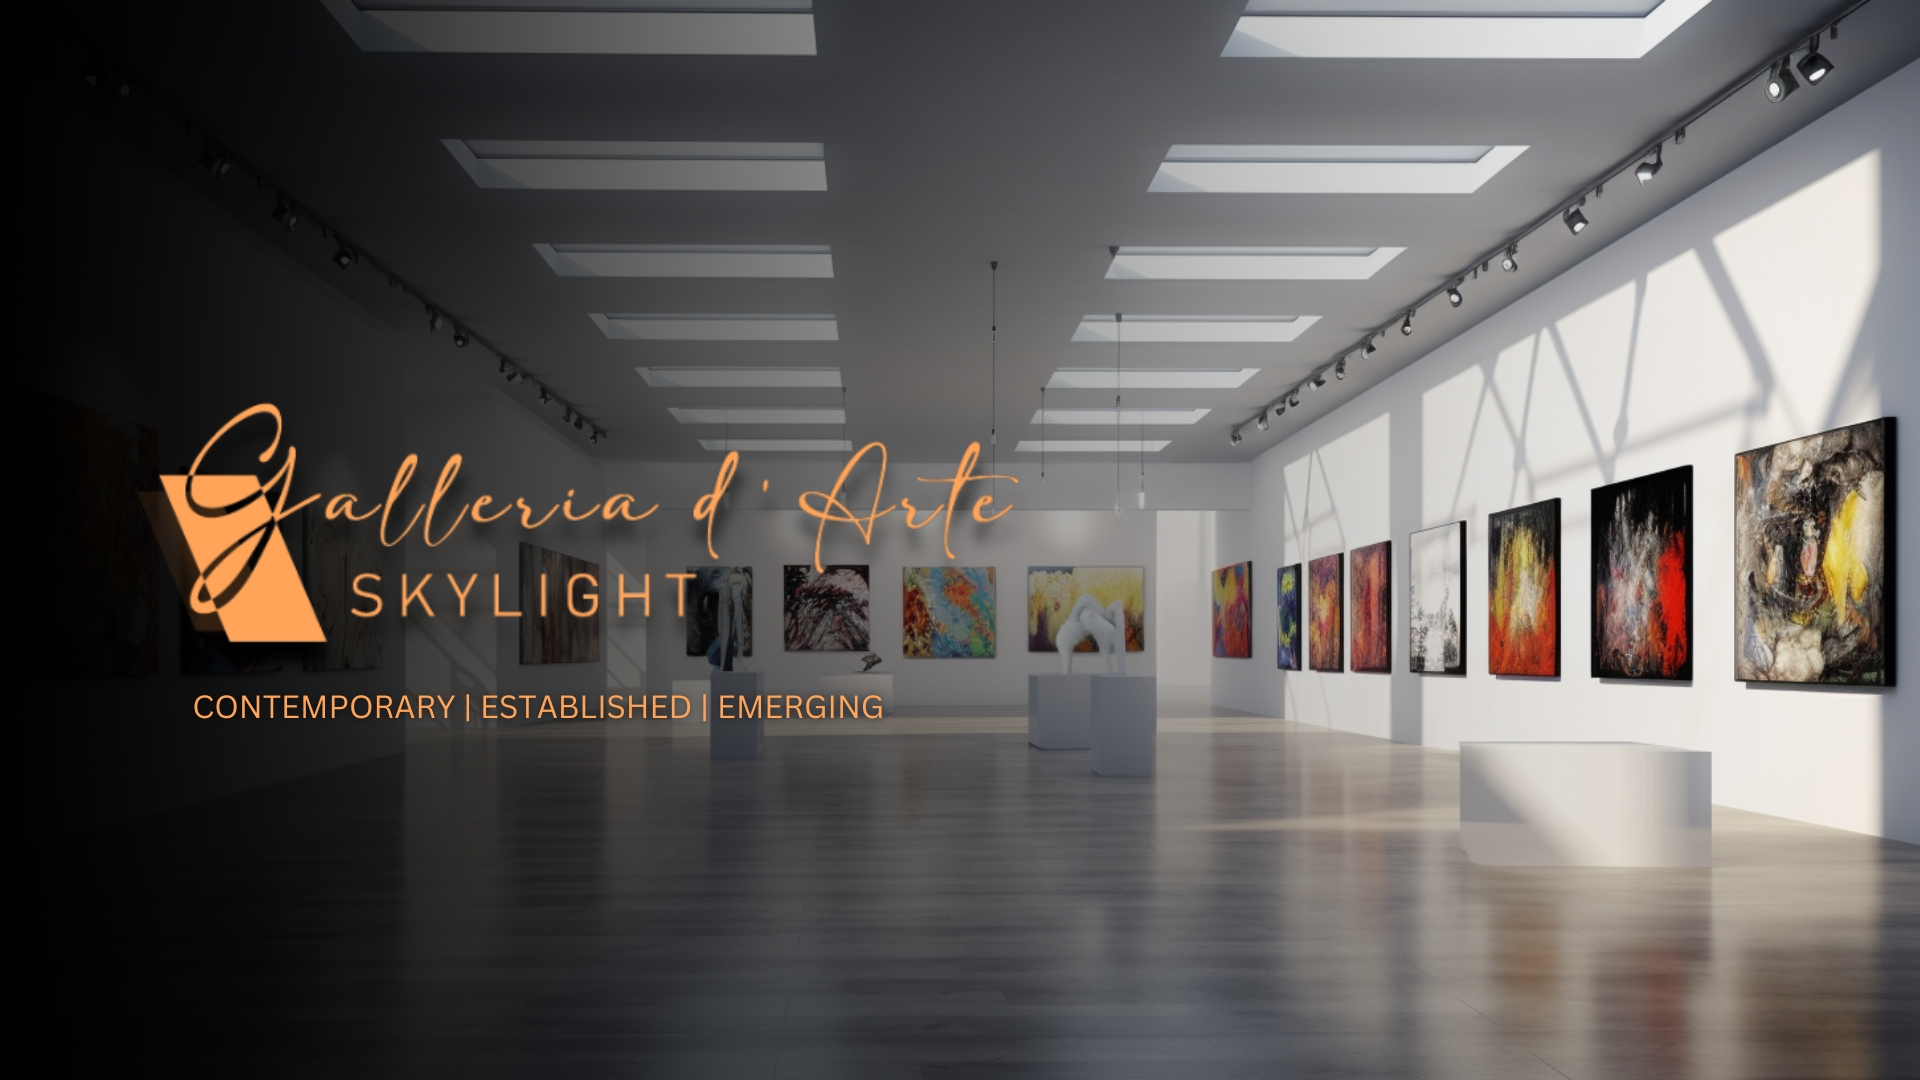 Galleria d'Arte Skylight, Monday, June 5, 2023, Press release picture